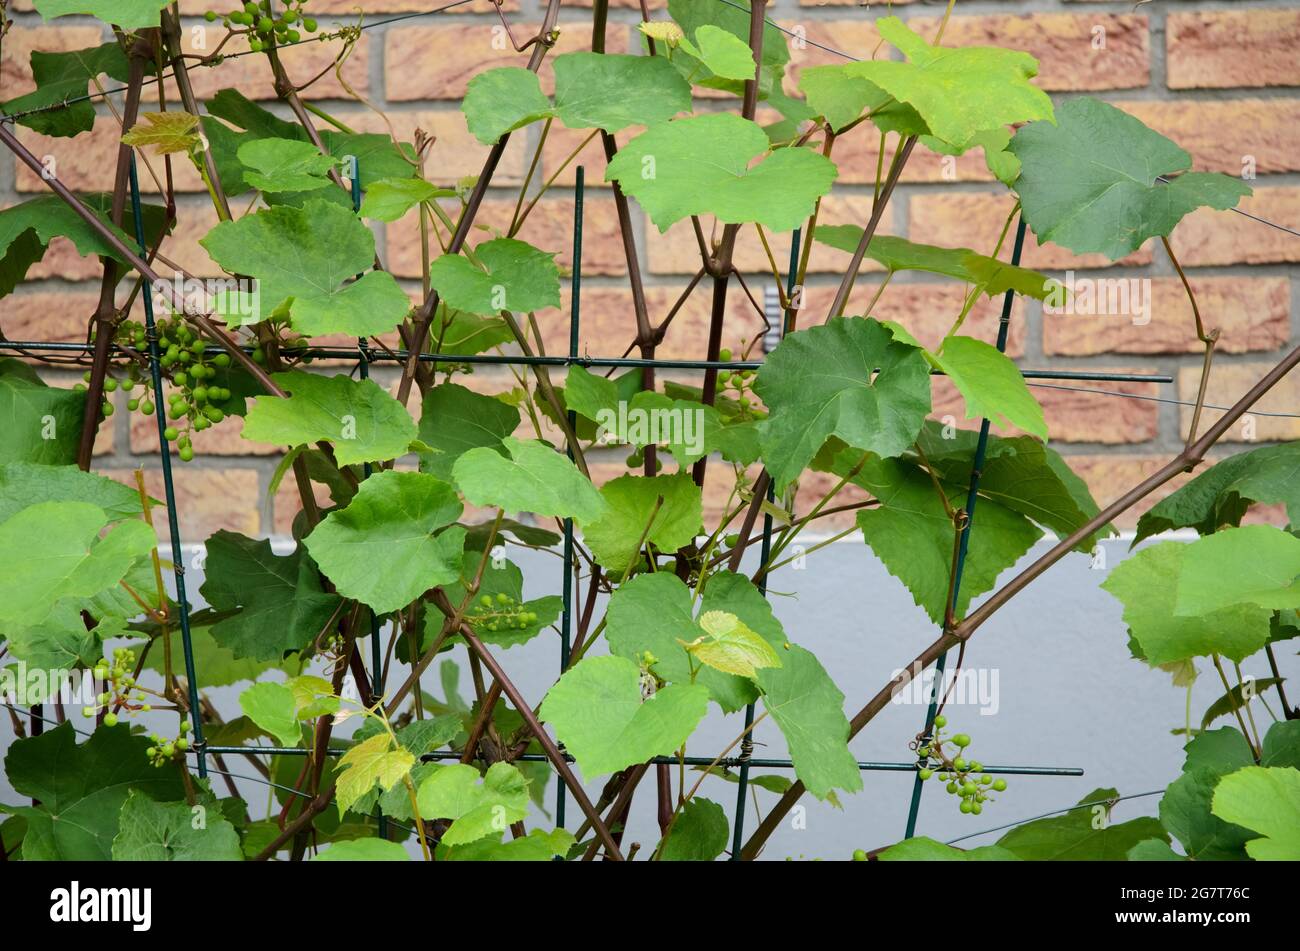 Vitis vinifera, young green common grape vine leaves, grapevine plant in the garden Stock Photo